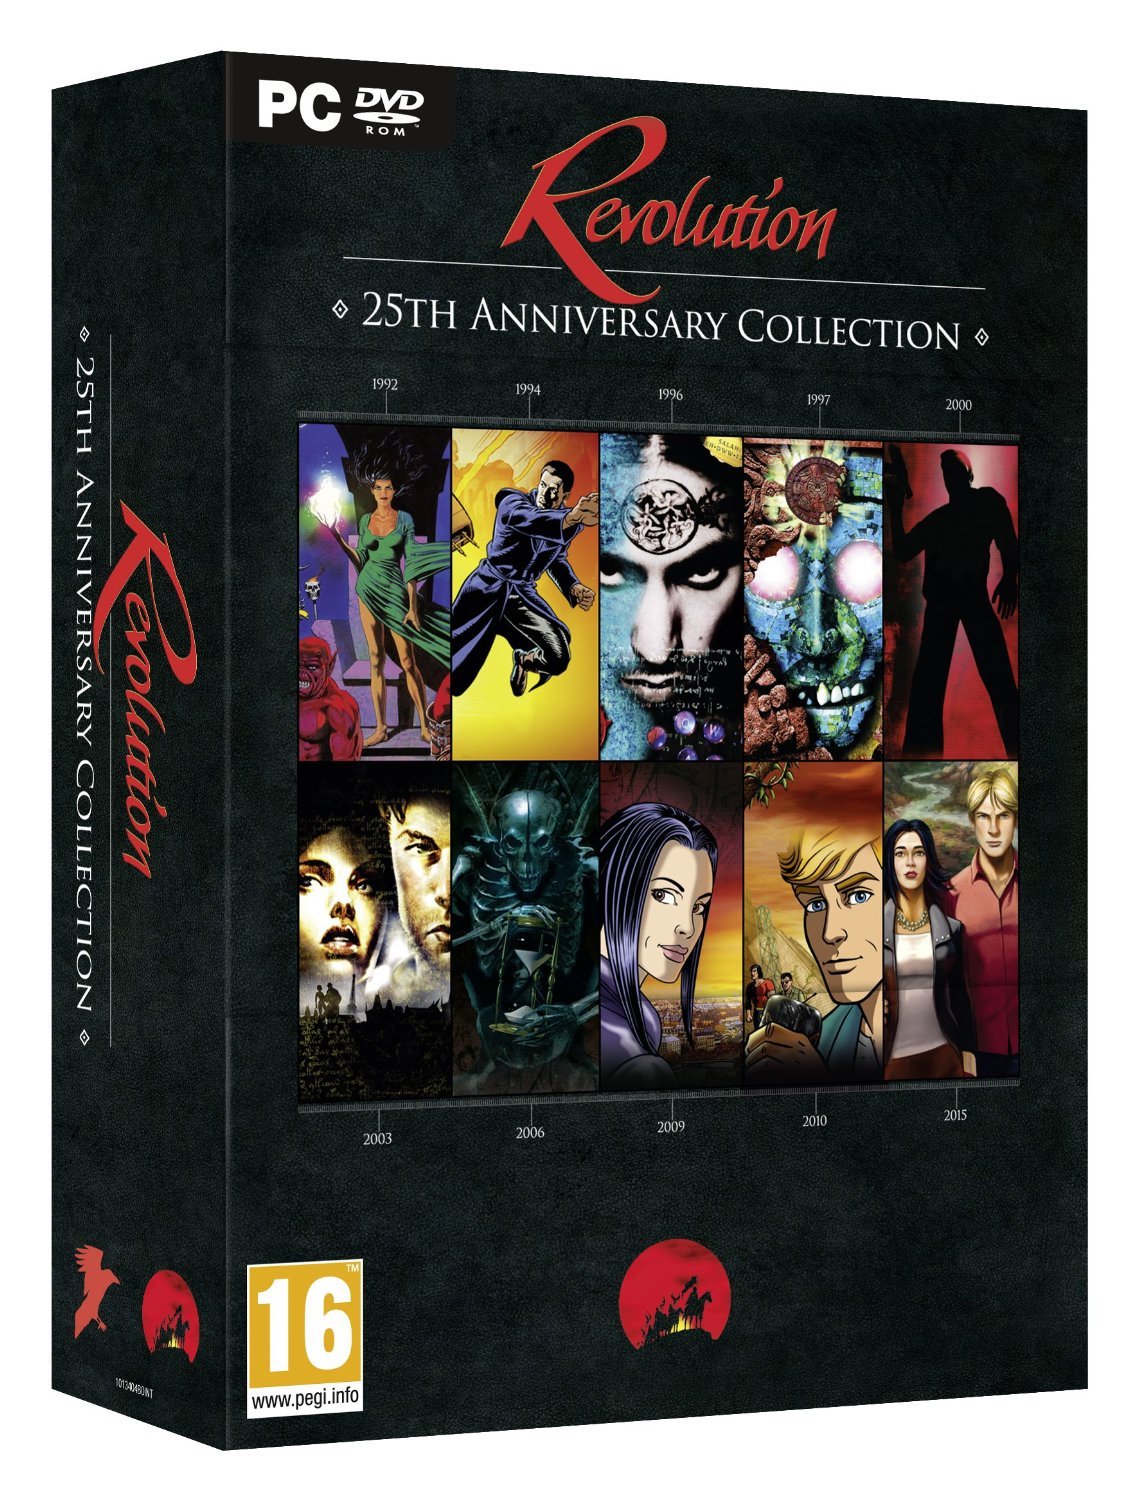 Köp Revolution 25th Anniversary Collection